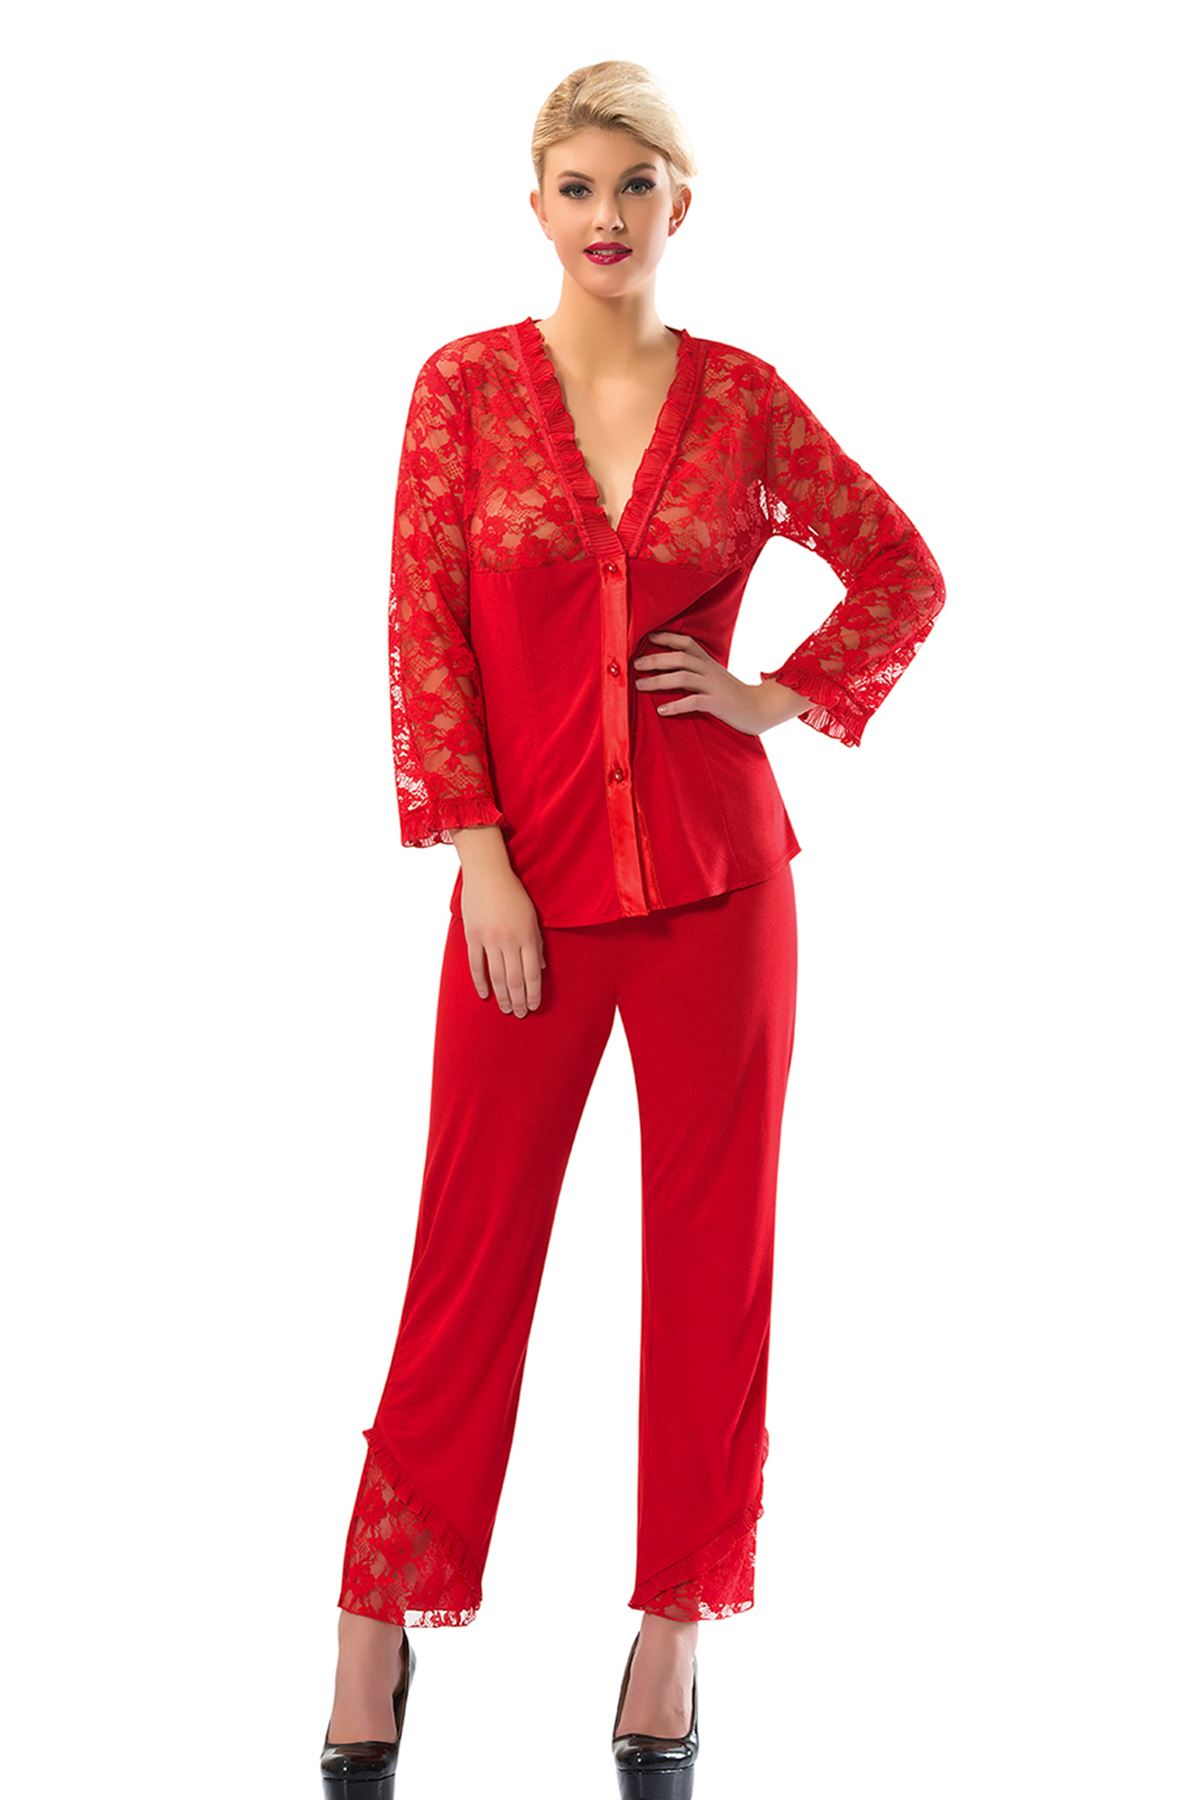 Kırmızı Penye Pijama Takımı - 1570